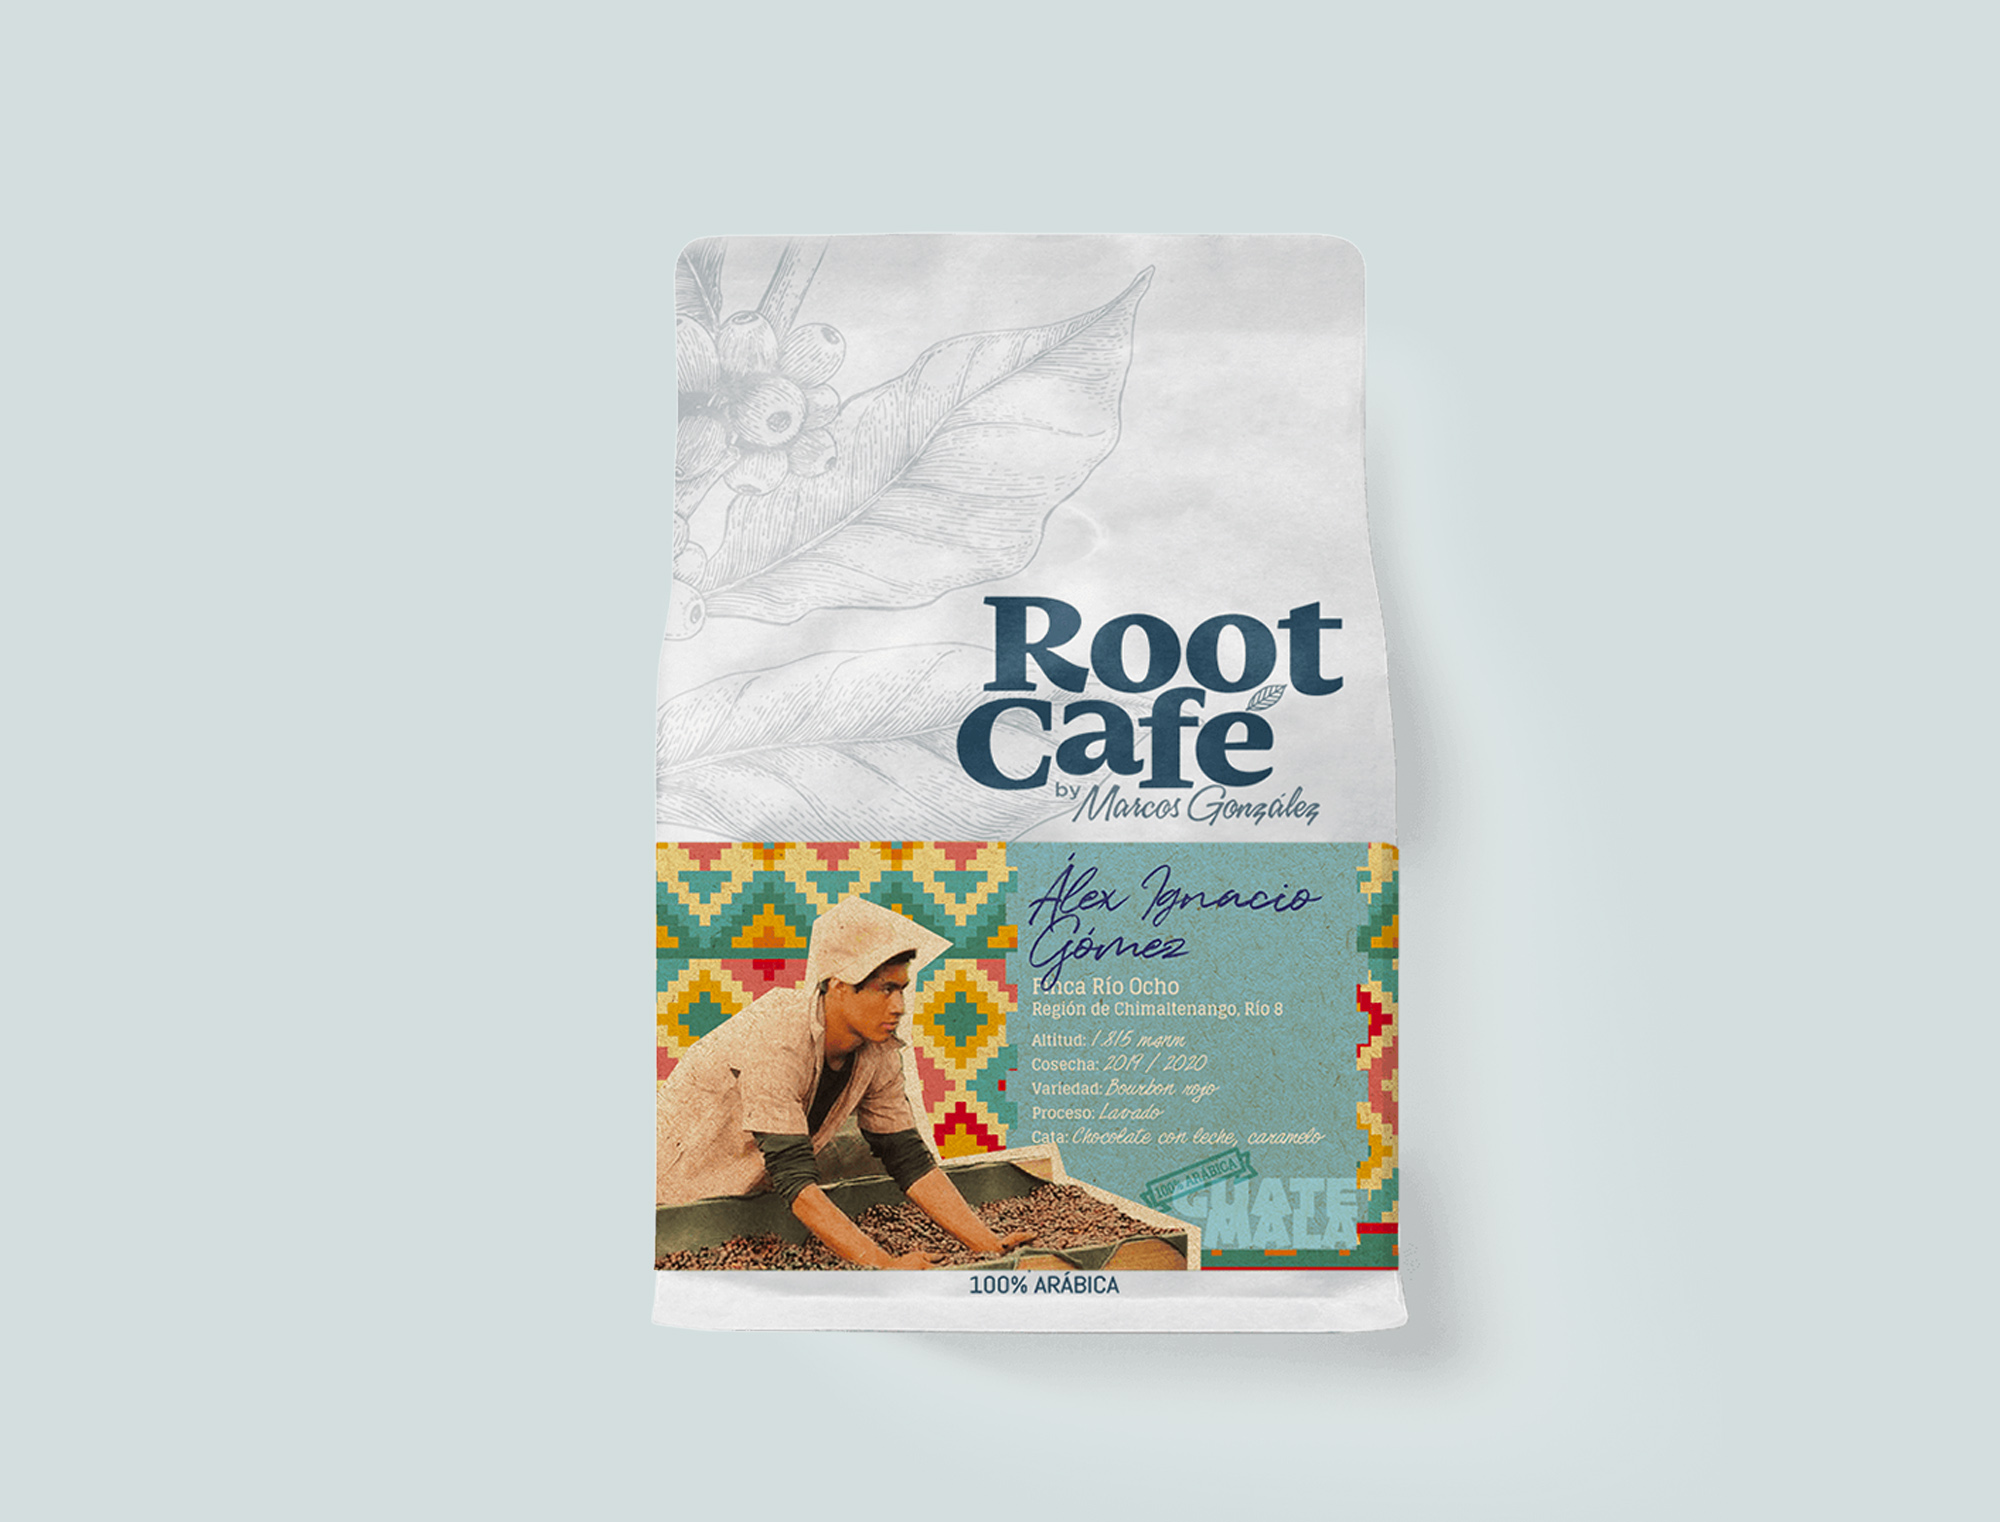 roots cafe proyecto luna